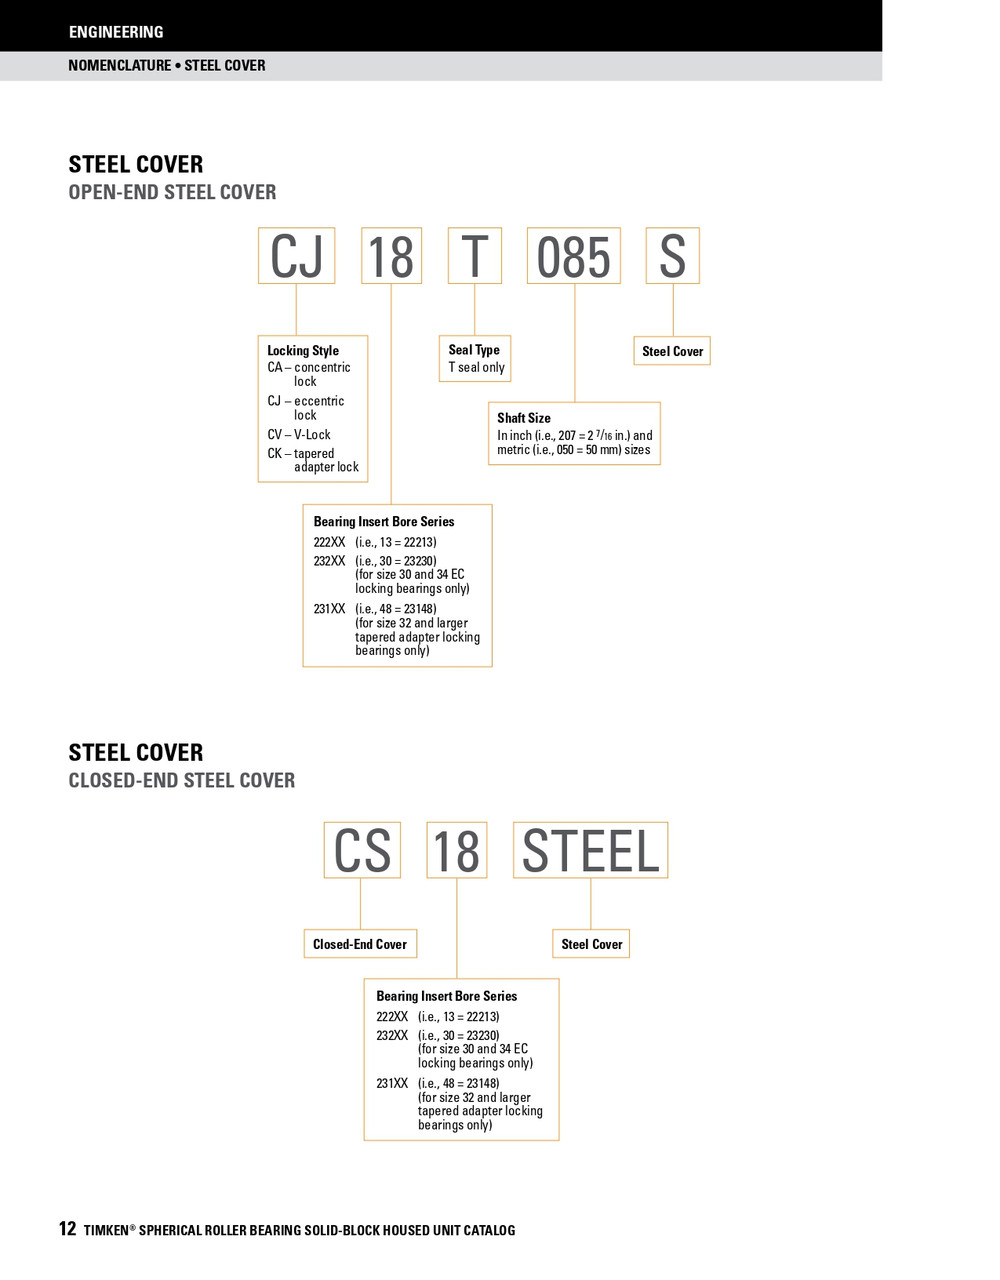 2-1/4" Timken SRB Steel Open End Cover w/Teflon Seal - QV V-Lock® Type   CV13T204S